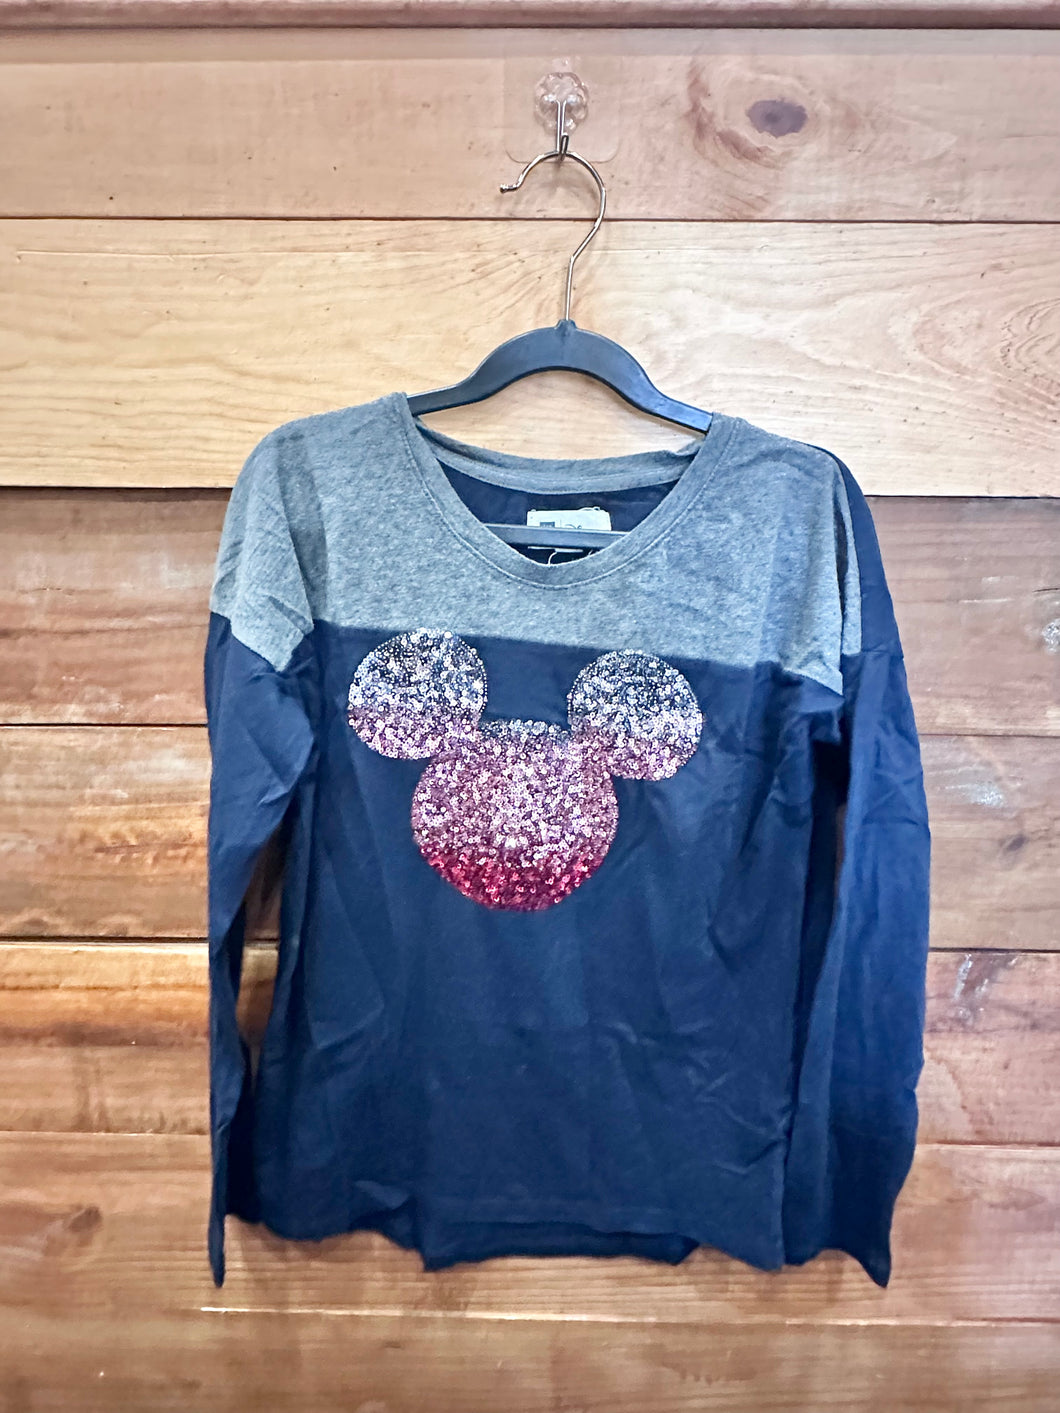 Gap x Disney Mickey Shirt Size 10